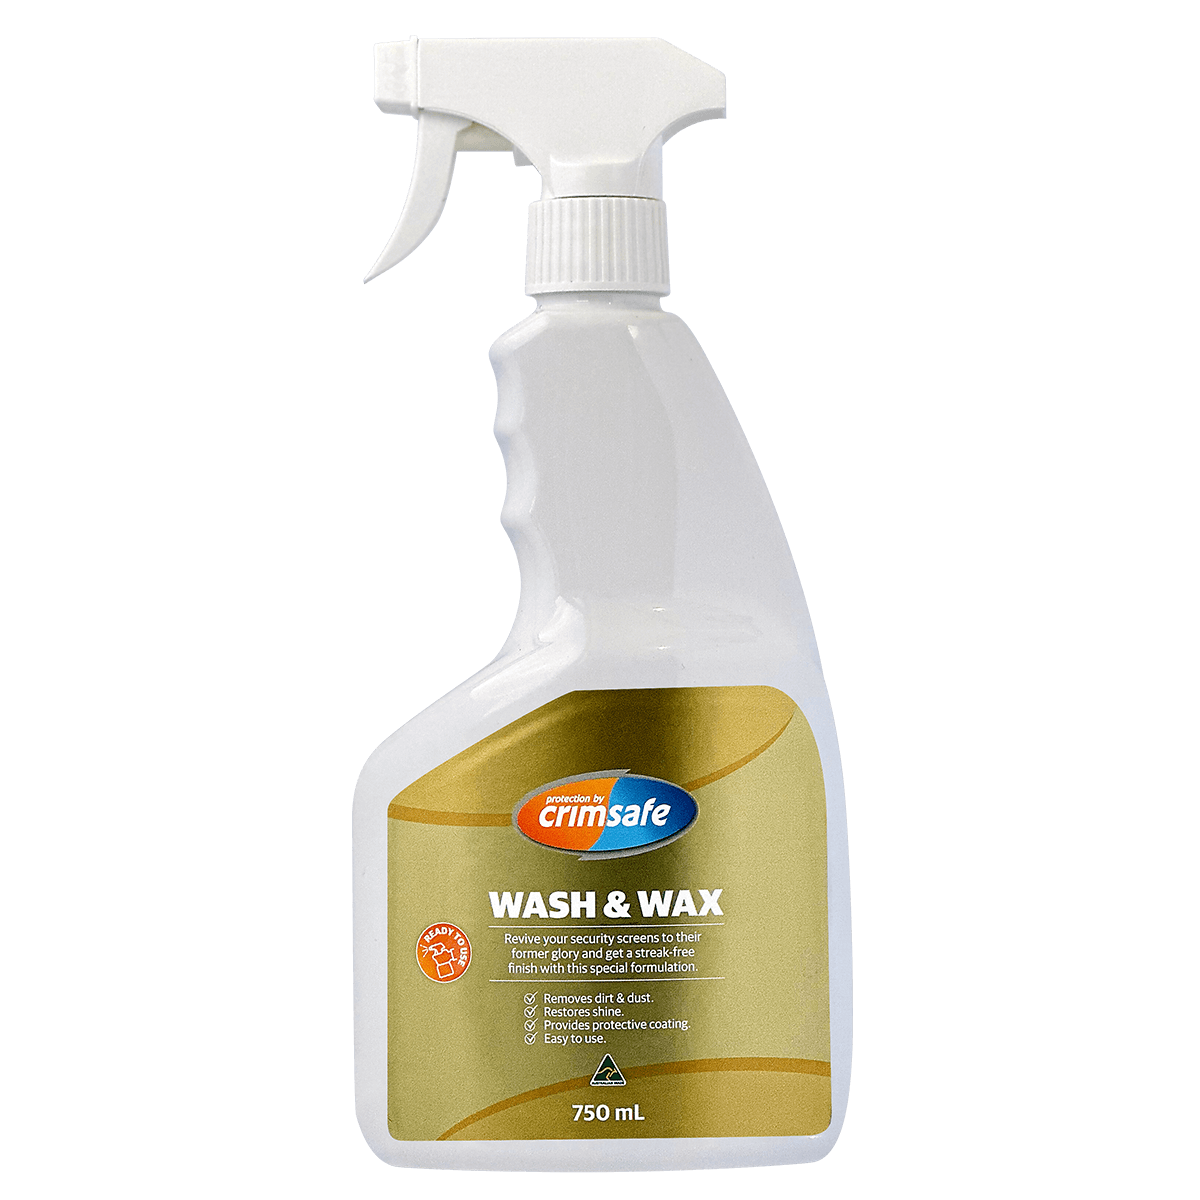 Crimsafe Wash & Wax Ready to Use - 750ml